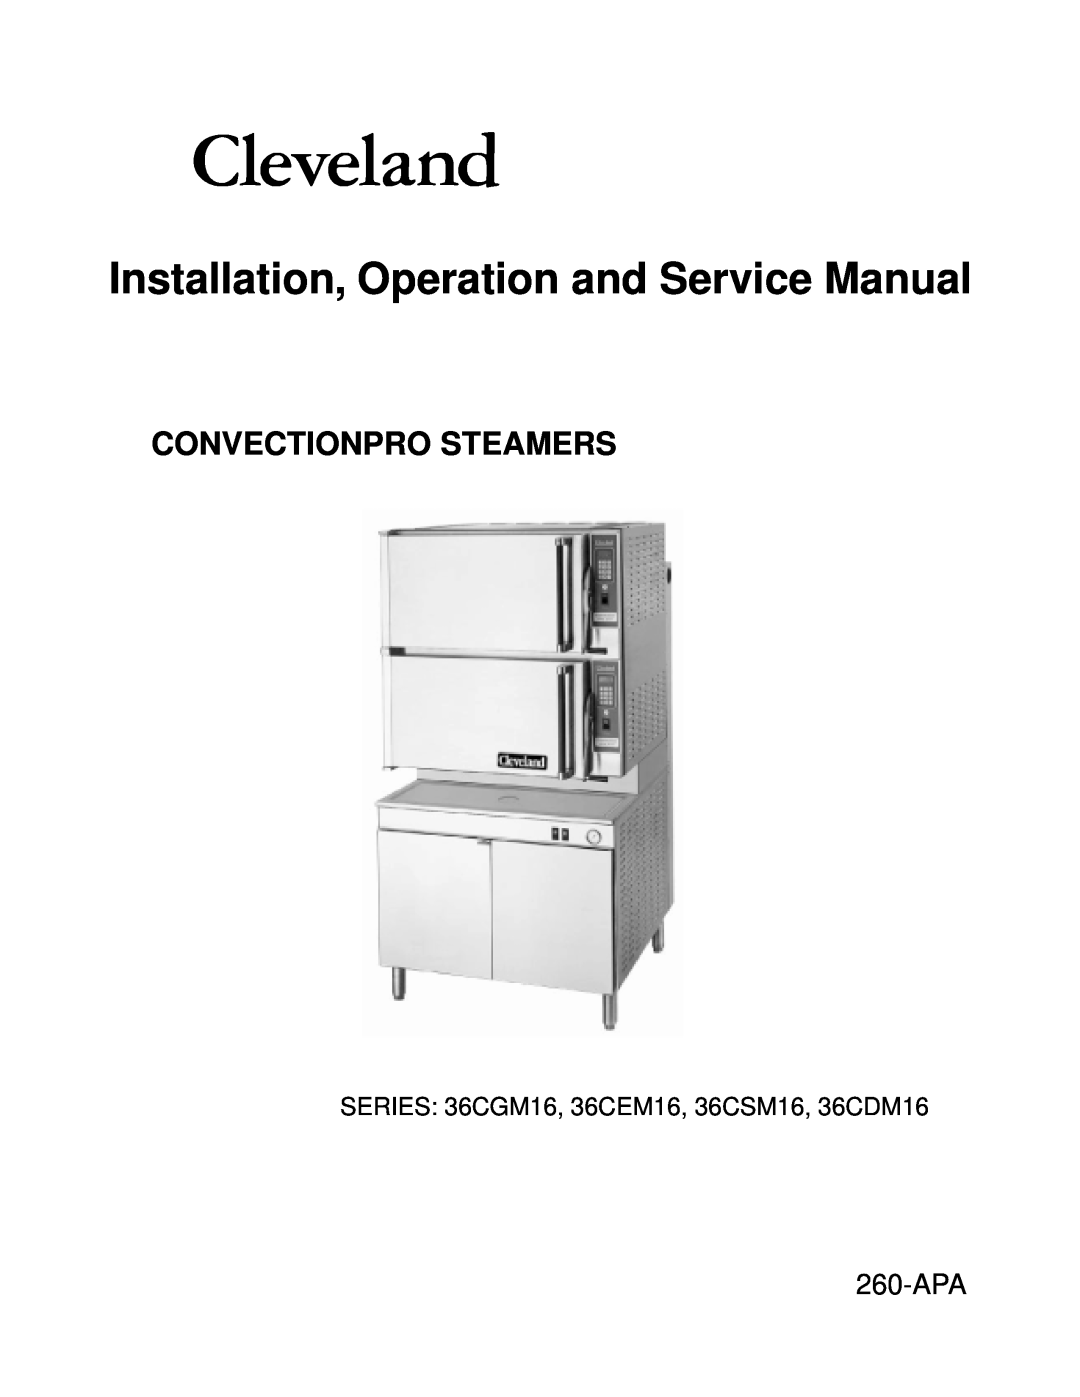 Cleveland Range service manual Convectionpro Steamers, 260-APA, SERIES 36CGM16, 36CEM16, 36CSM16, 36CDM16 